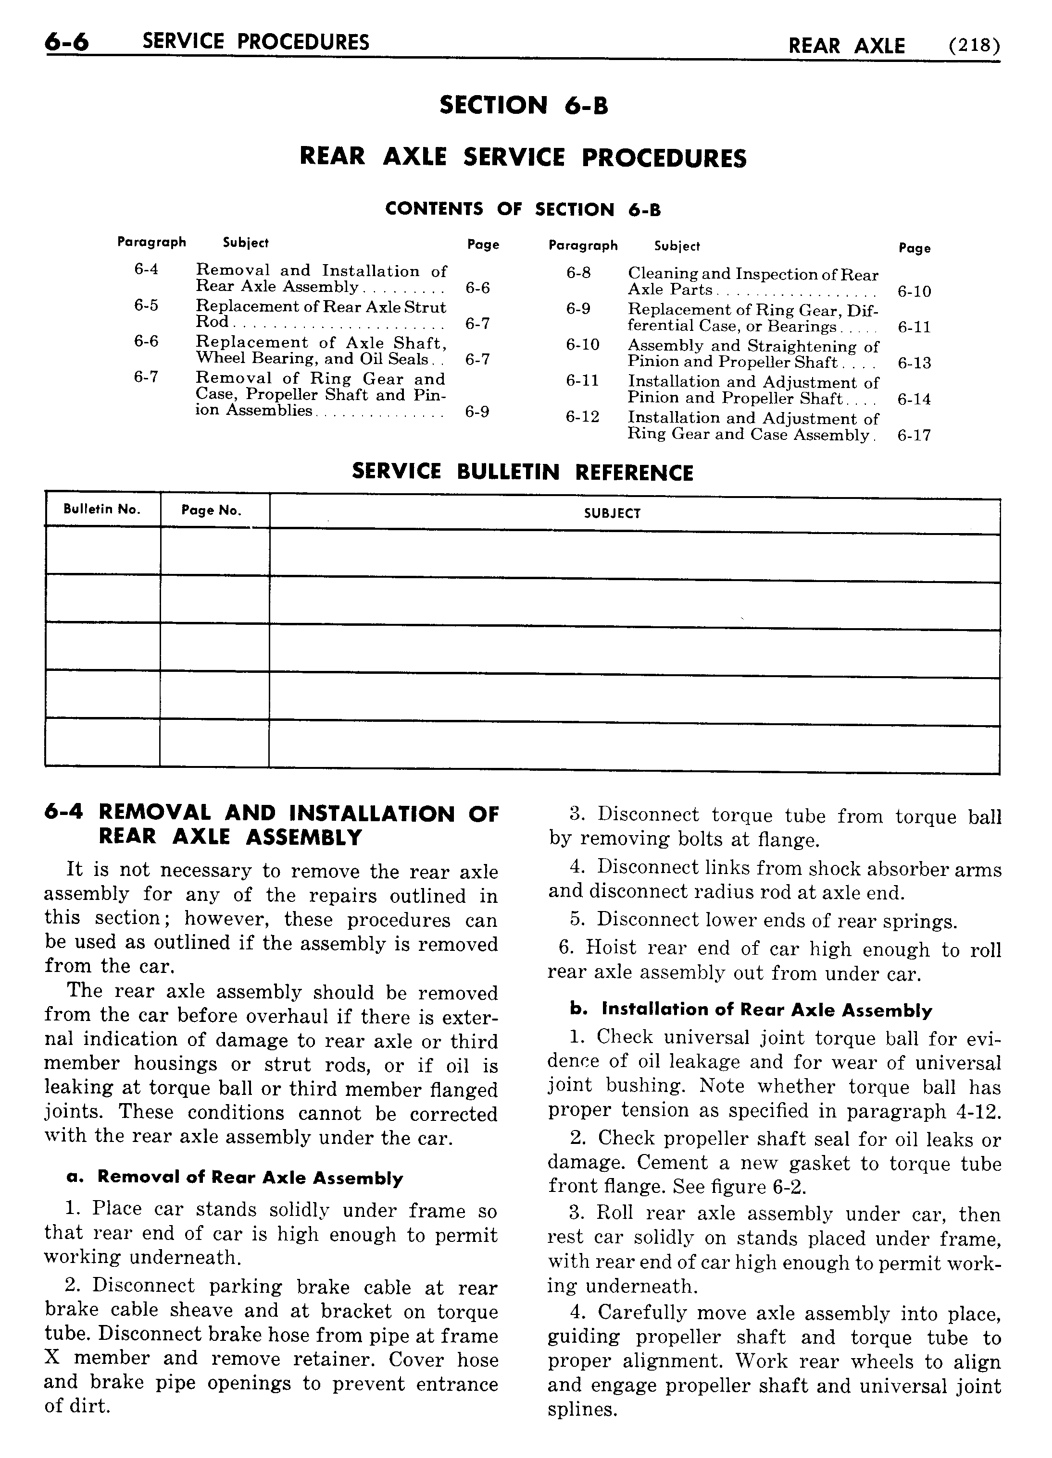 n_07 1954 Buick Shop Manual - Rear Axle-006-006.jpg